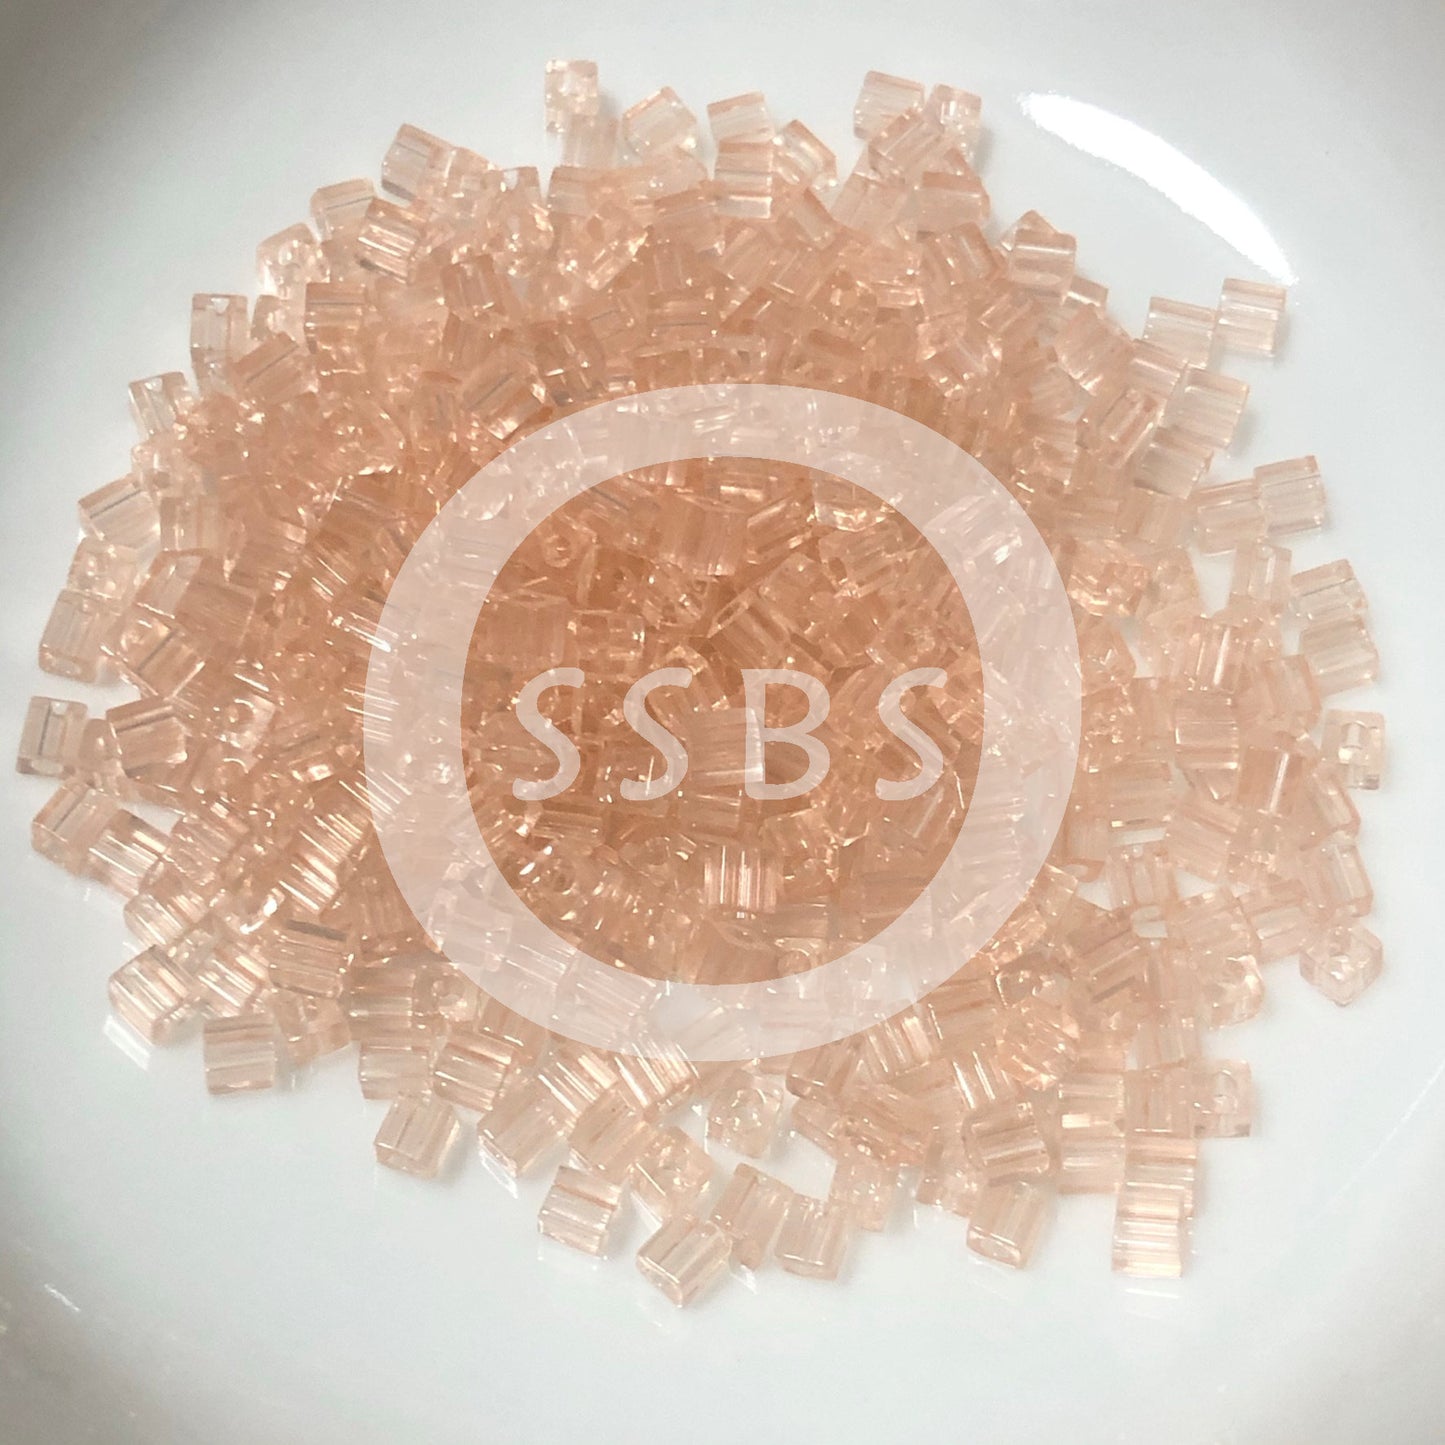 Miyuki 3 mm Square / Cube SB3-155 Transparent Light Tea Rose Beads - 5 gm